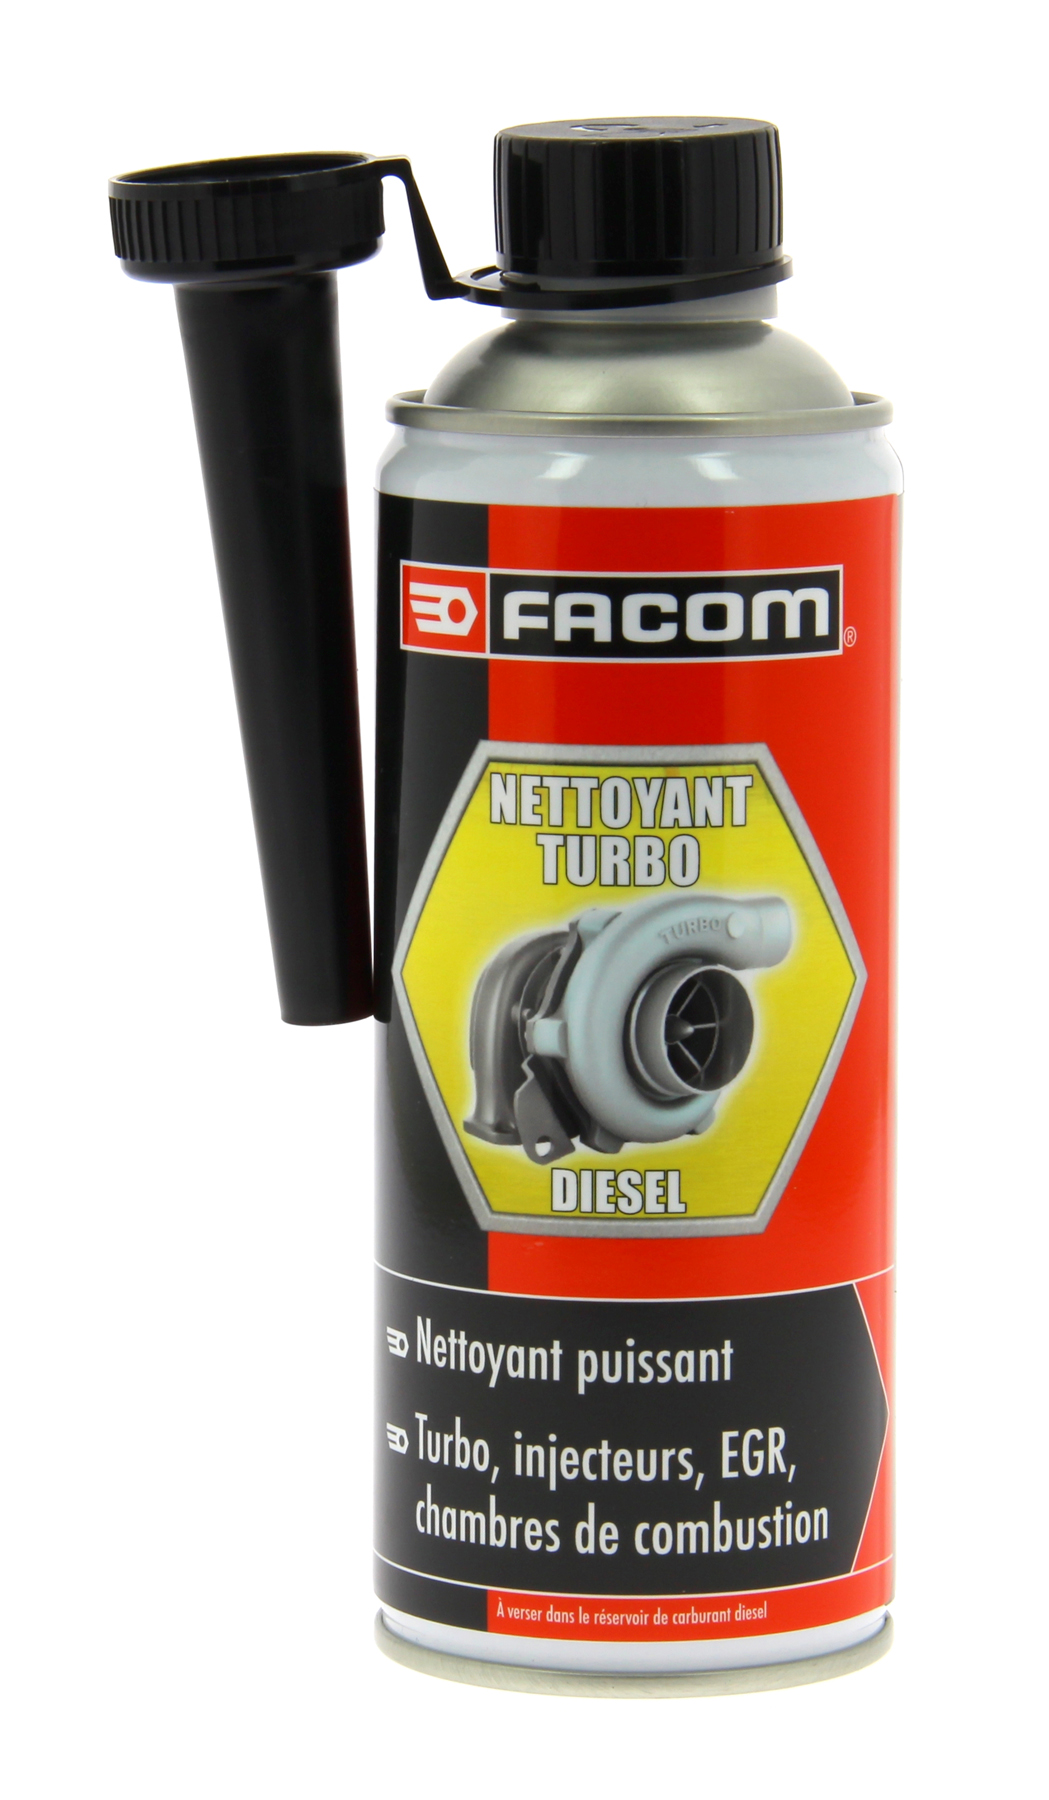 FACOM nettoyant turbo 475ml - Etape Auto